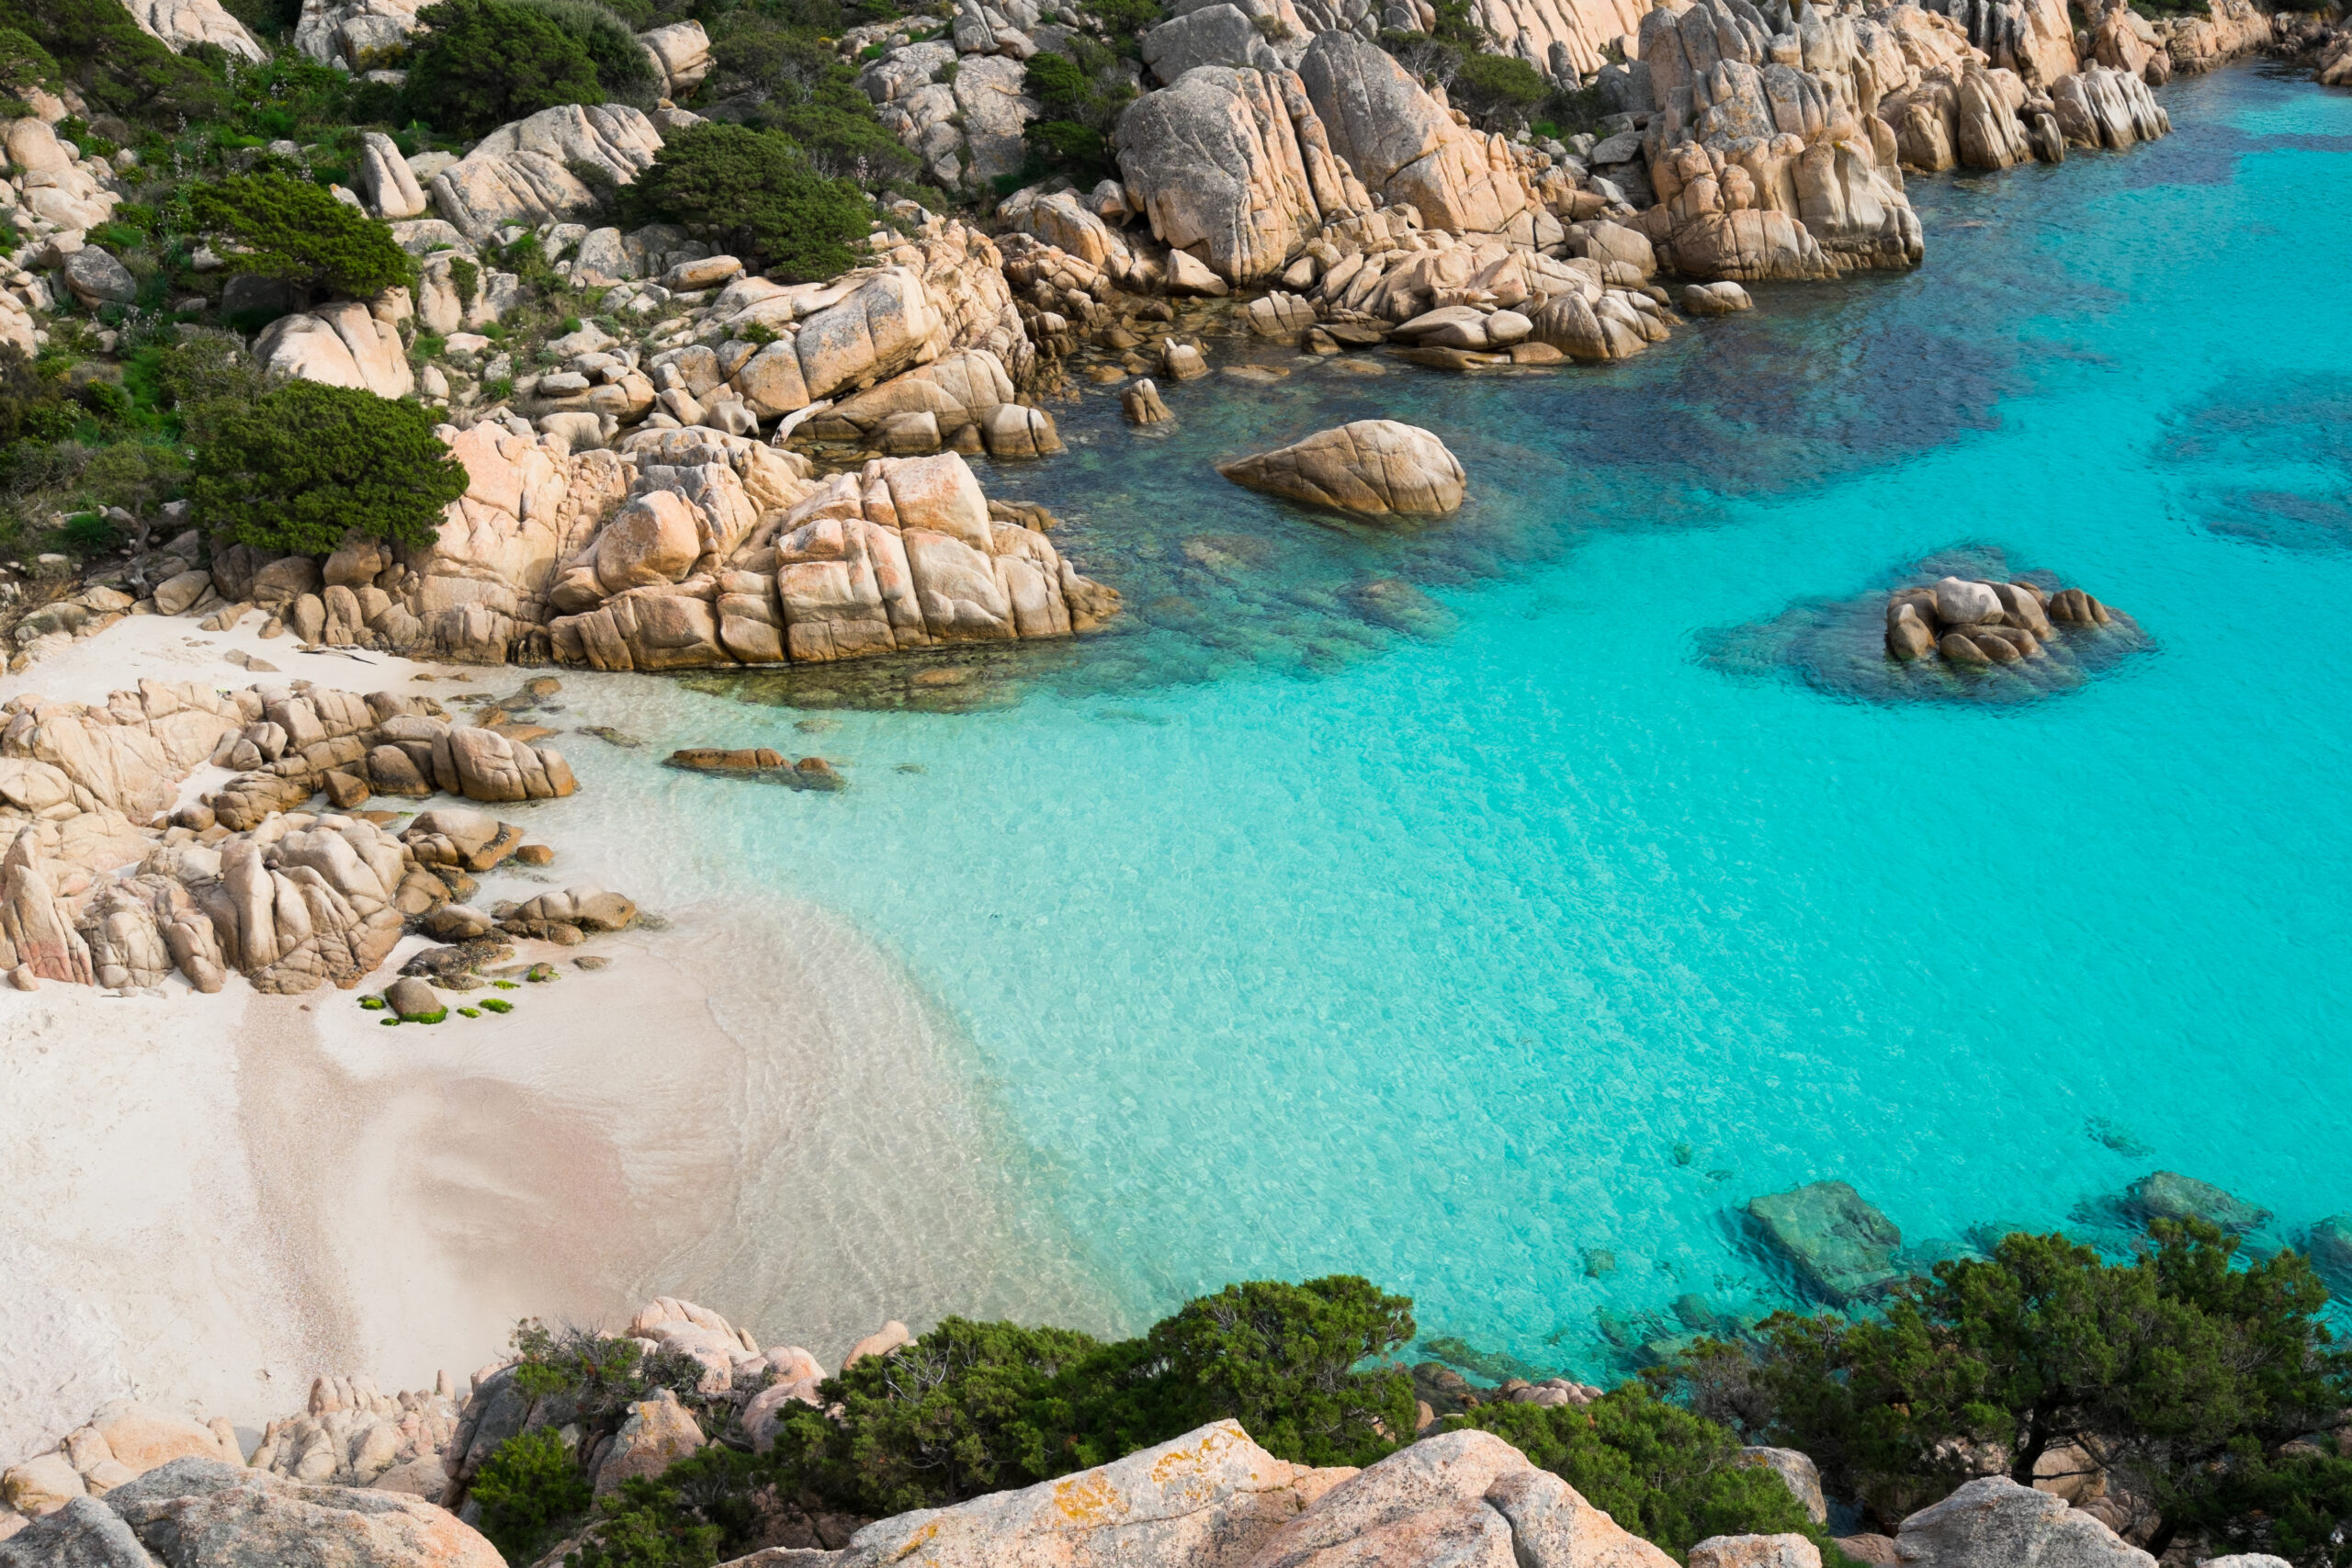 Greece Coast, Calm Blue Water, Rocks, Mediterranean Landscapes